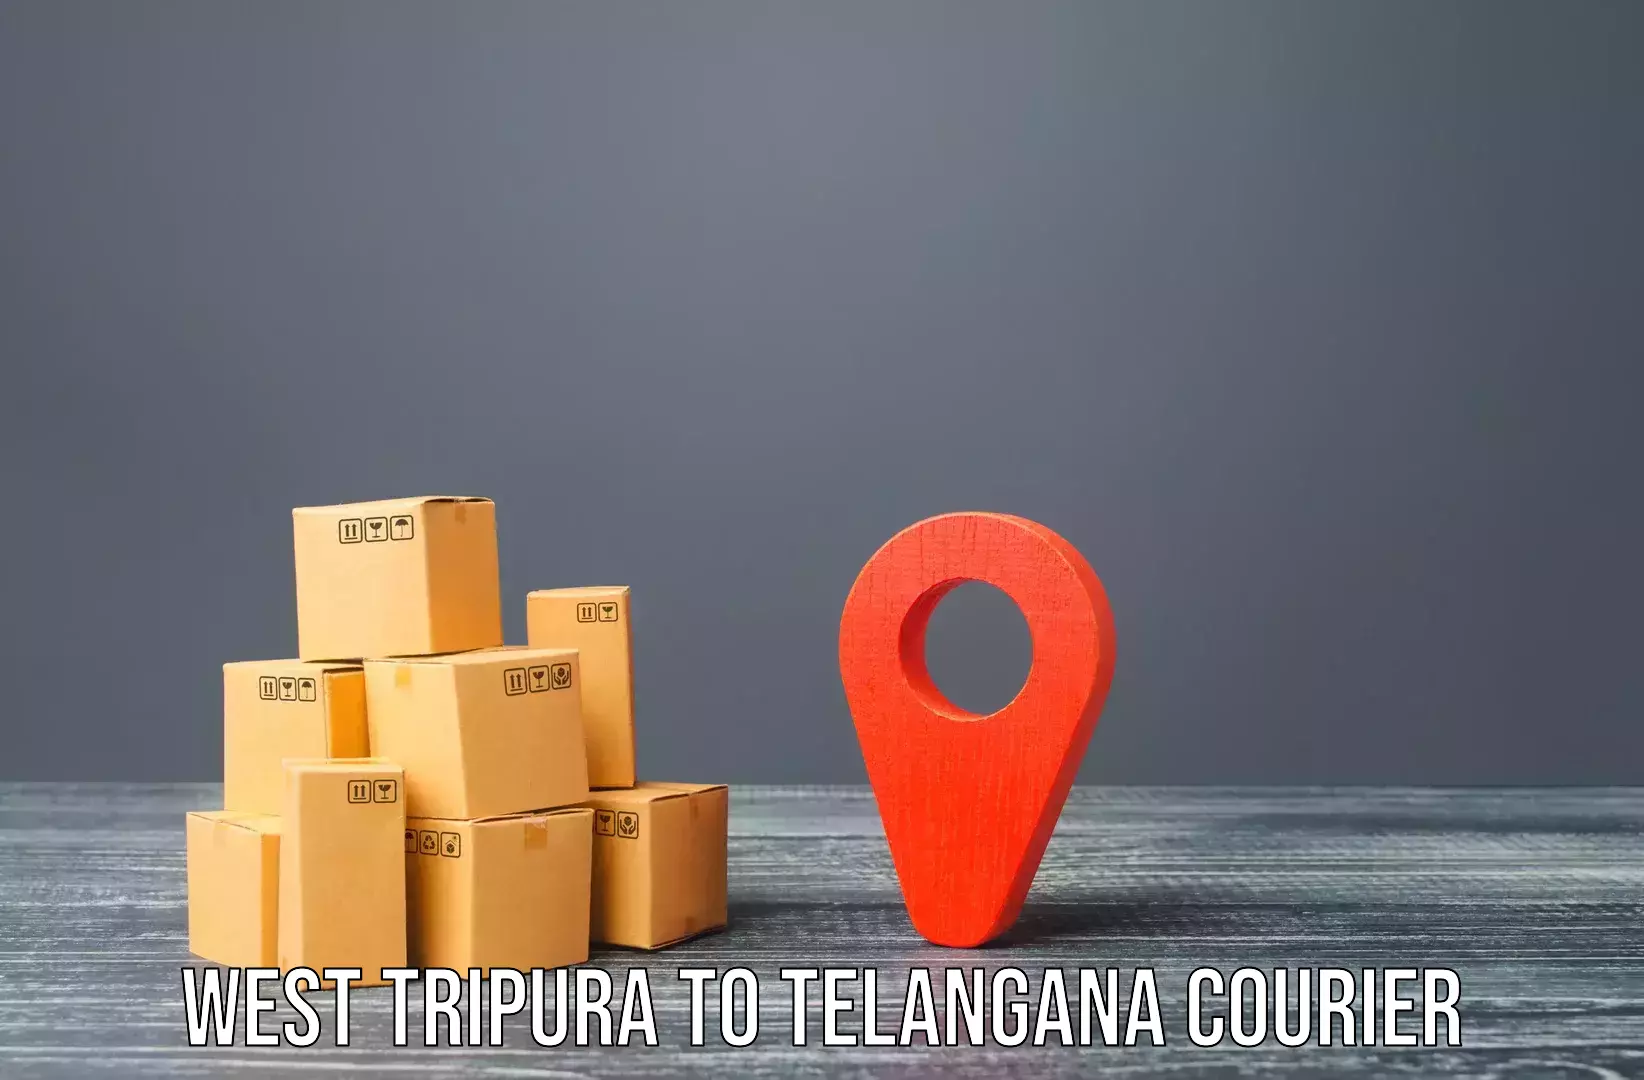 Furniture delivery service in West Tripura to Medak